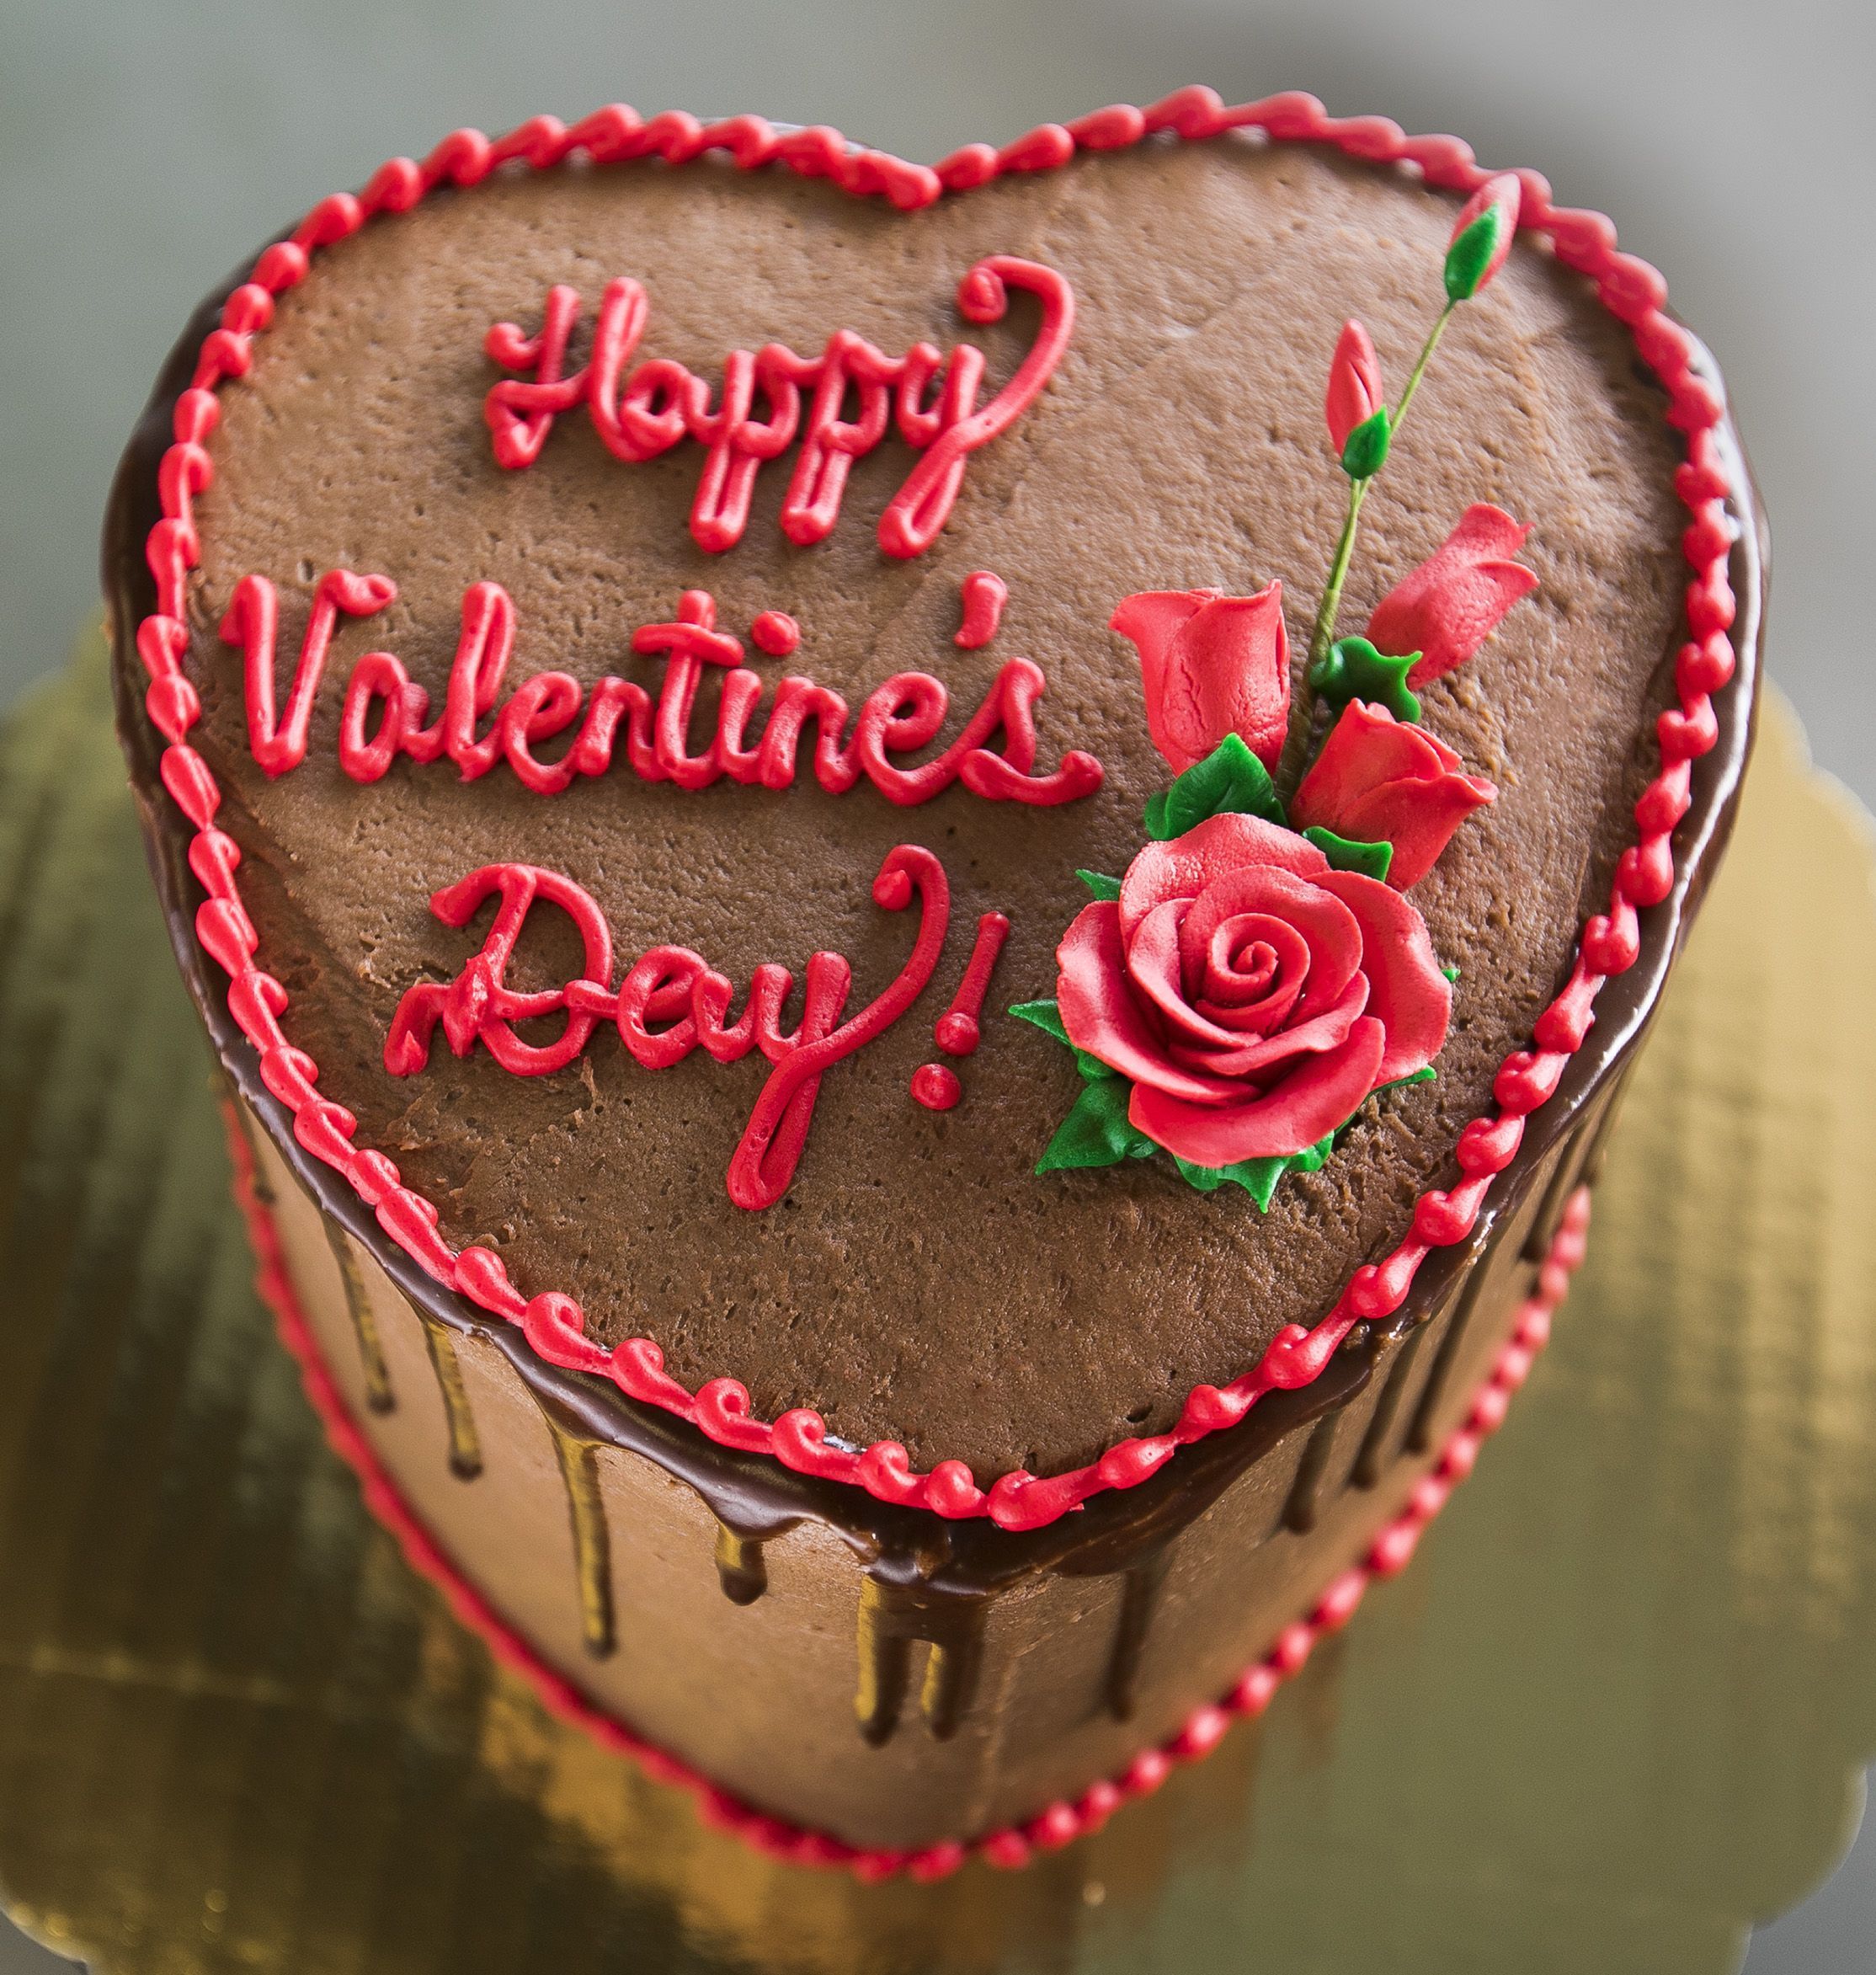 Valentines day cakes .com